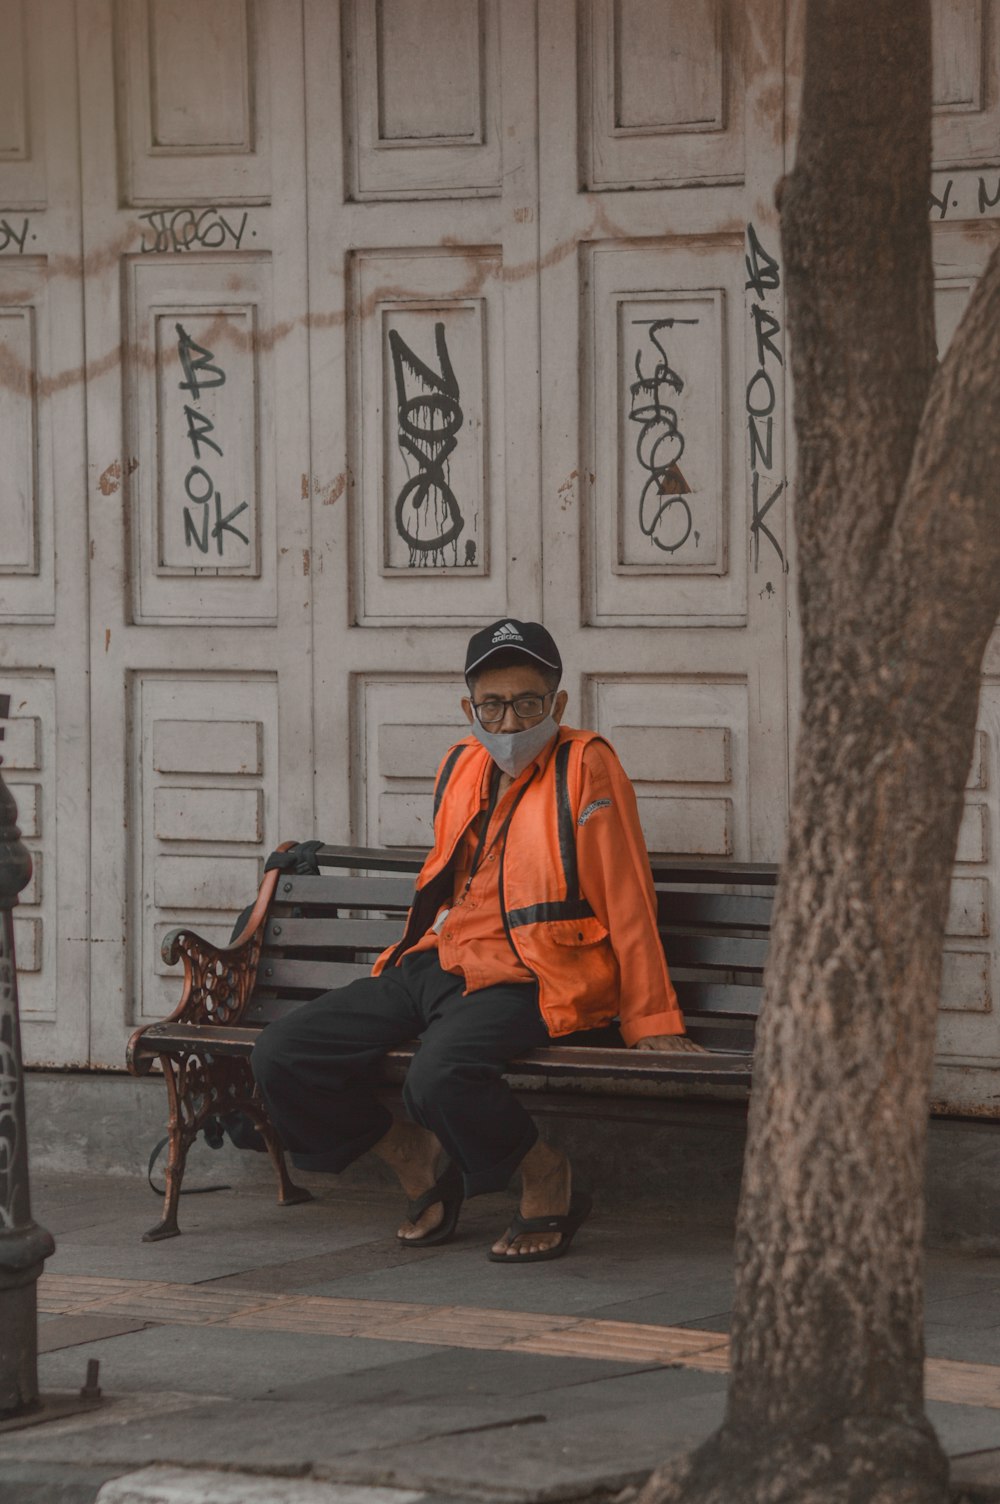 a man in an orange jacket sitting on a bench